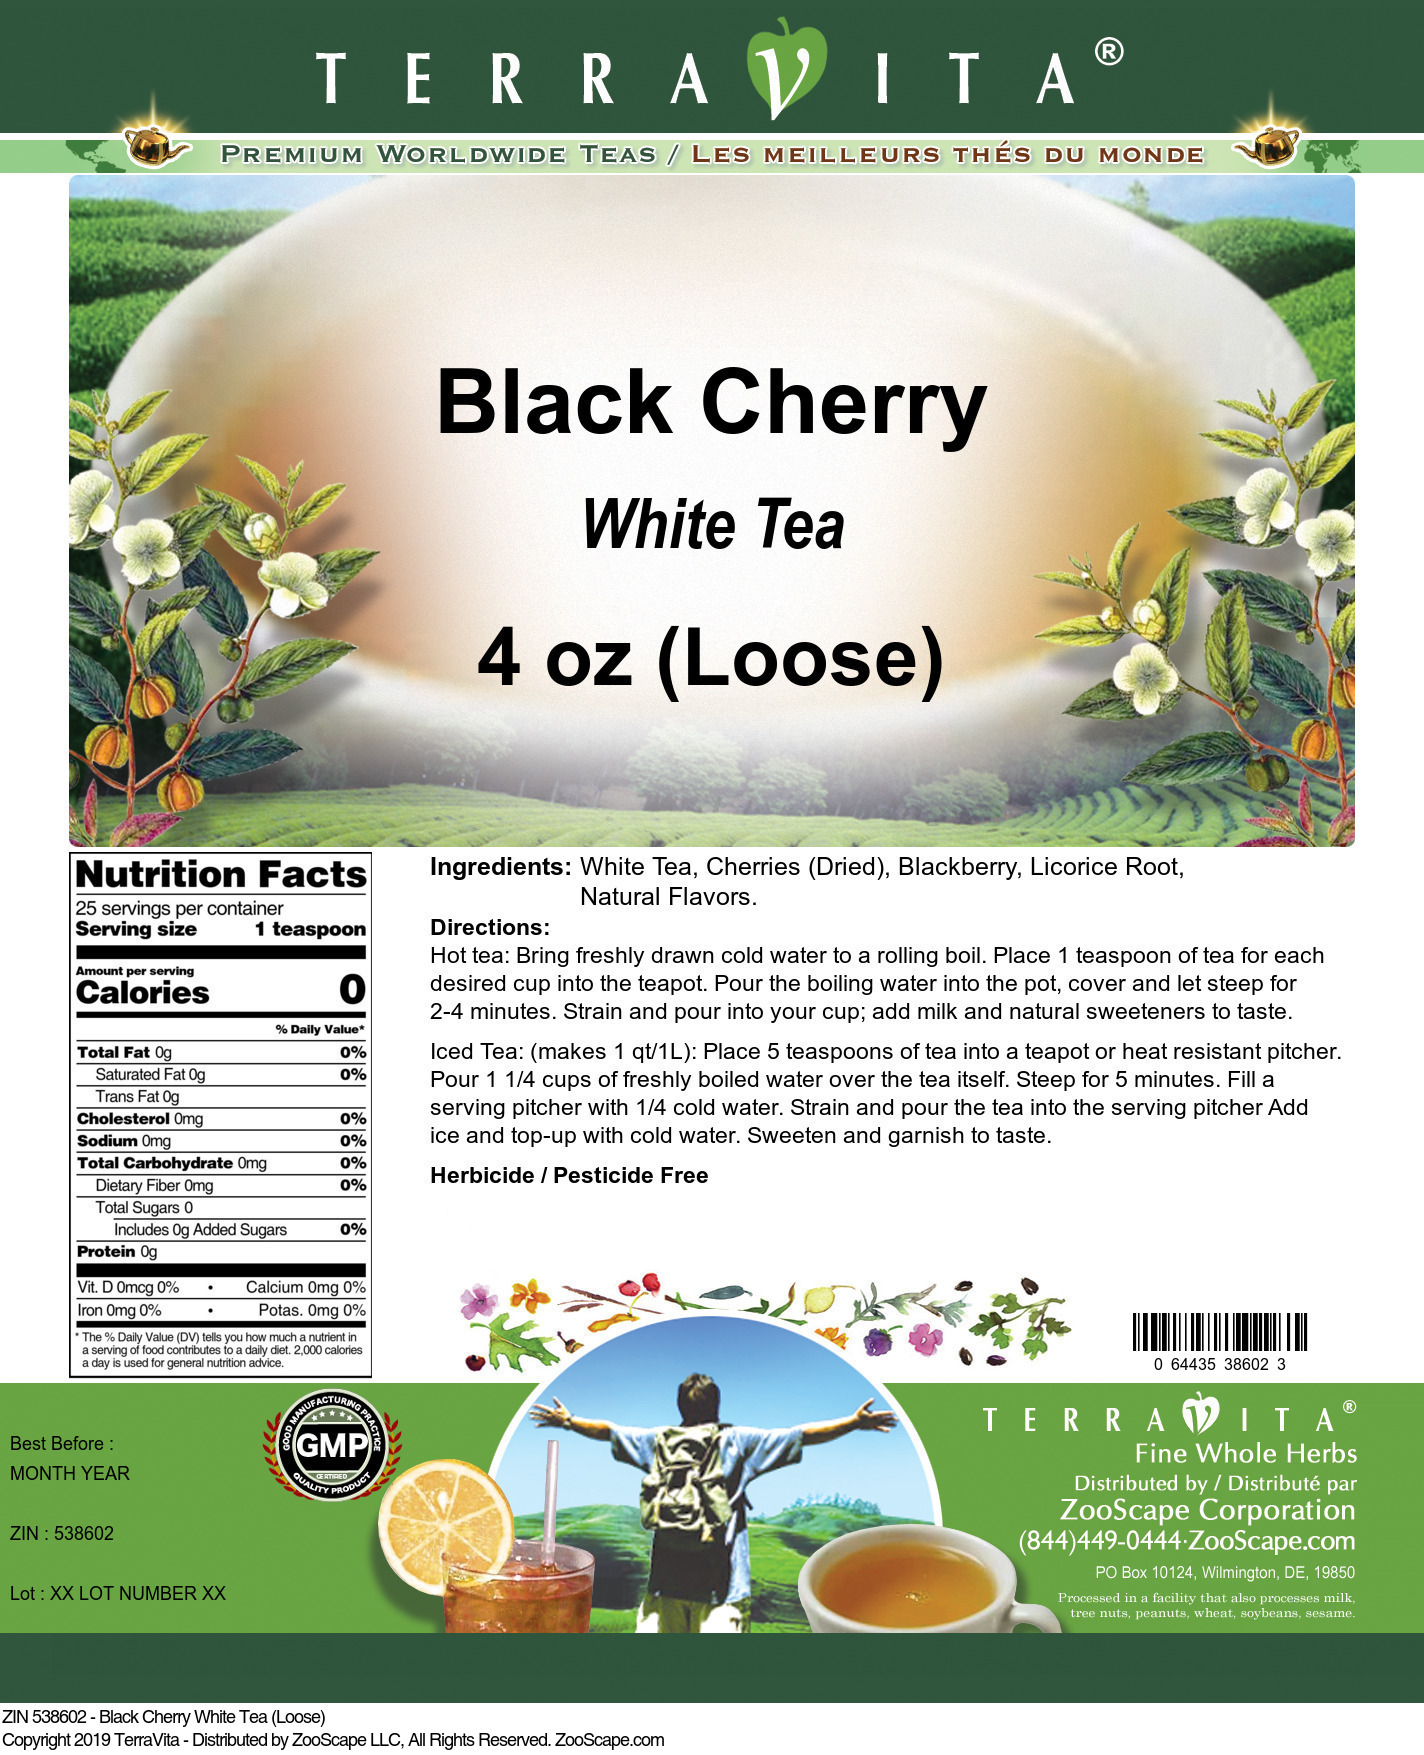 Black Cherry White Tea (Loose) - Label